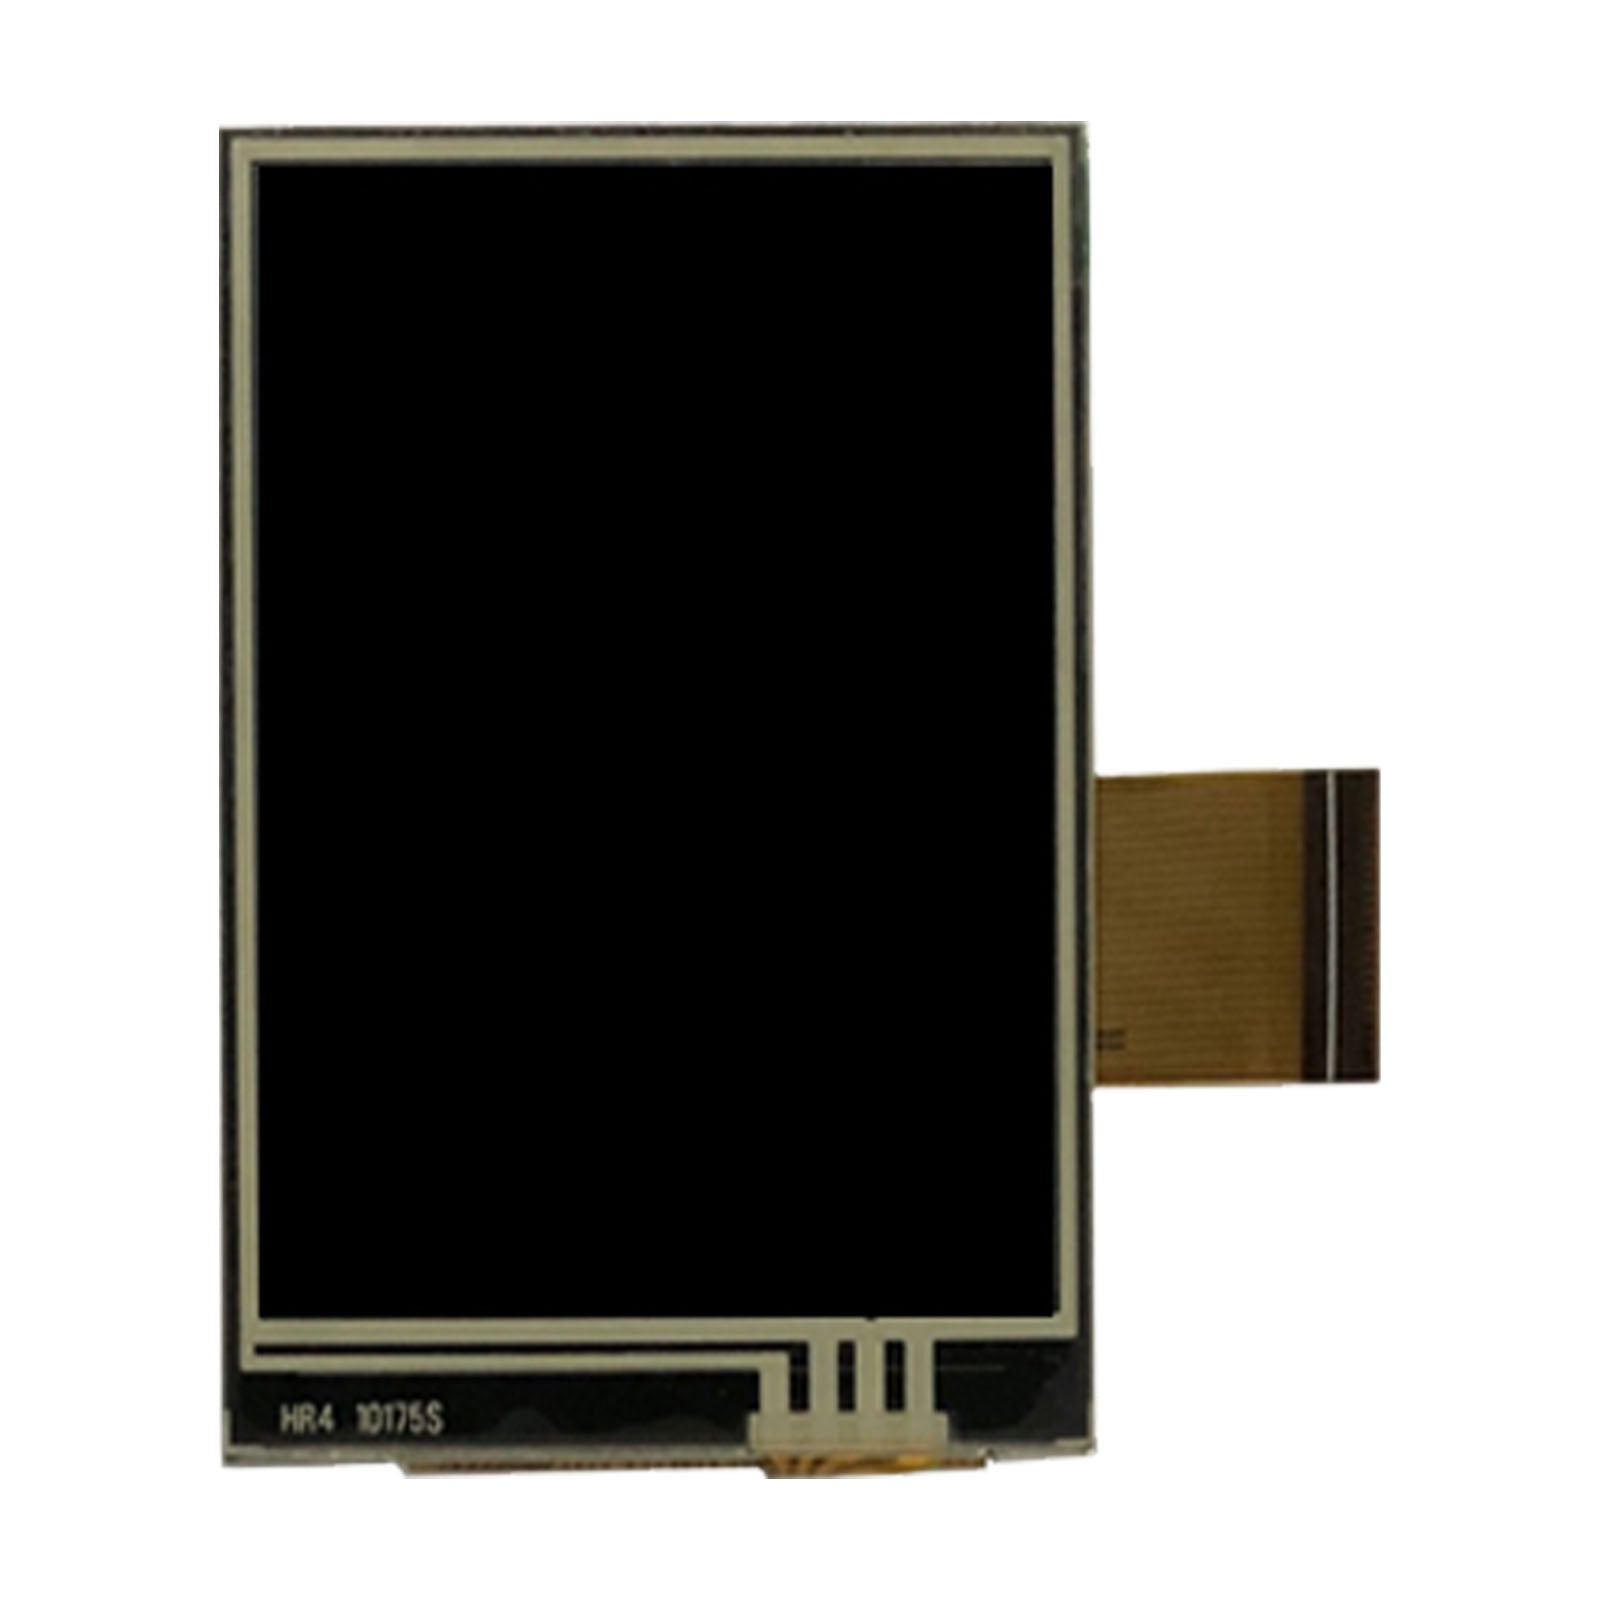 DisplayModule 2.6" 240X320 Transflective Display Panel with Resistive Touch – MCU/SPI/RGB